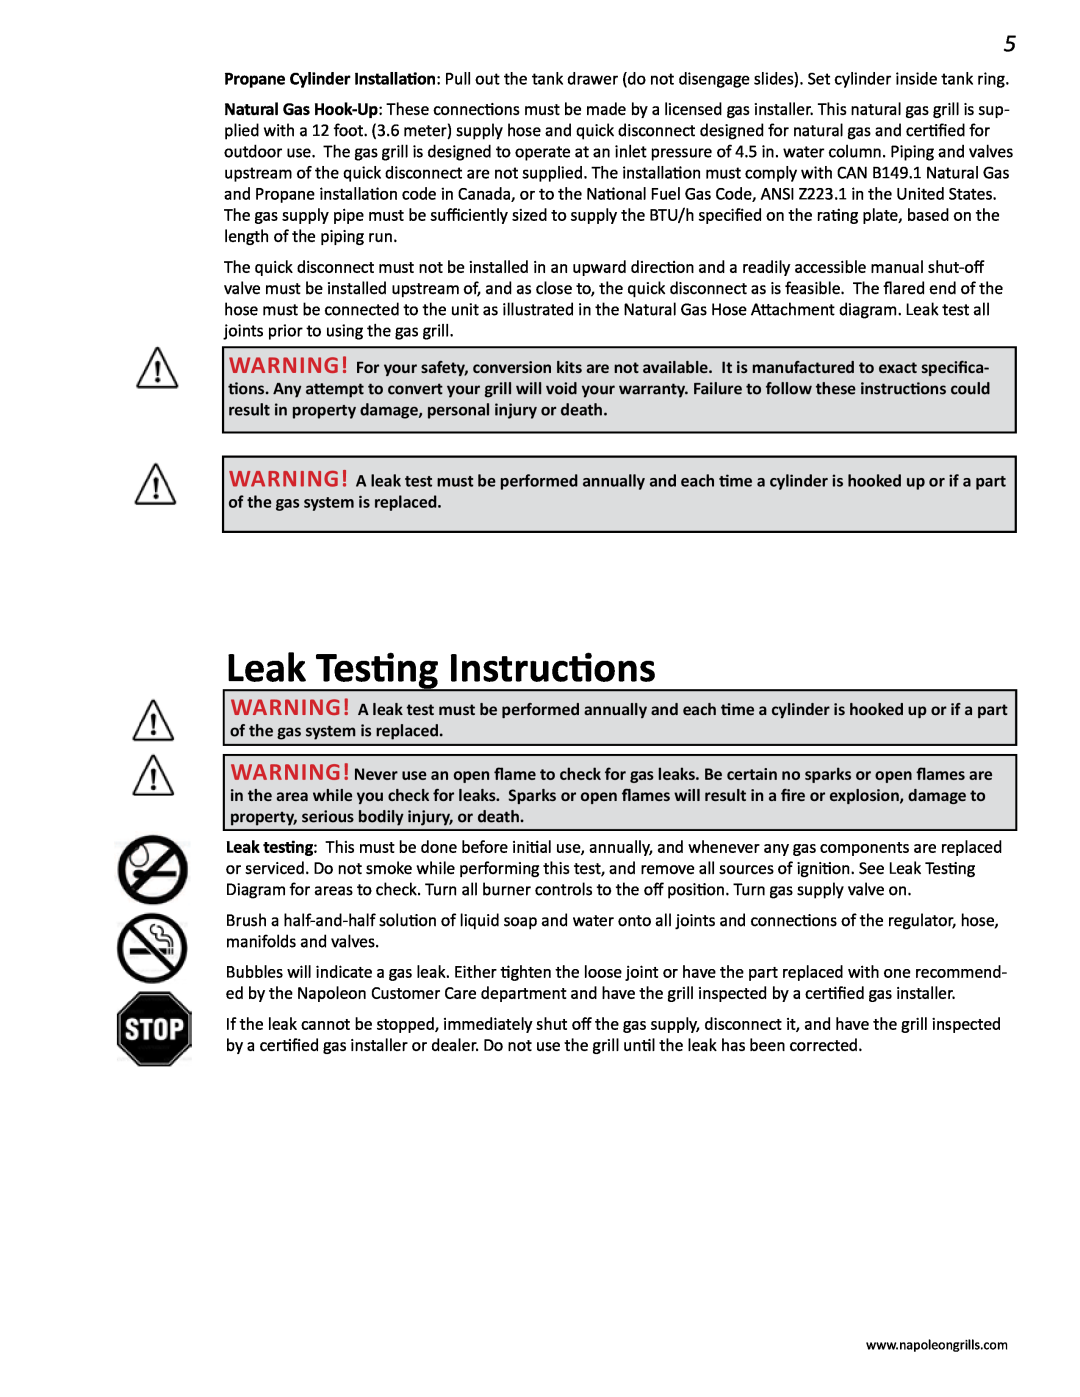 Napoleon Grills V 450, V 600 manual Leak Testing Instructions 